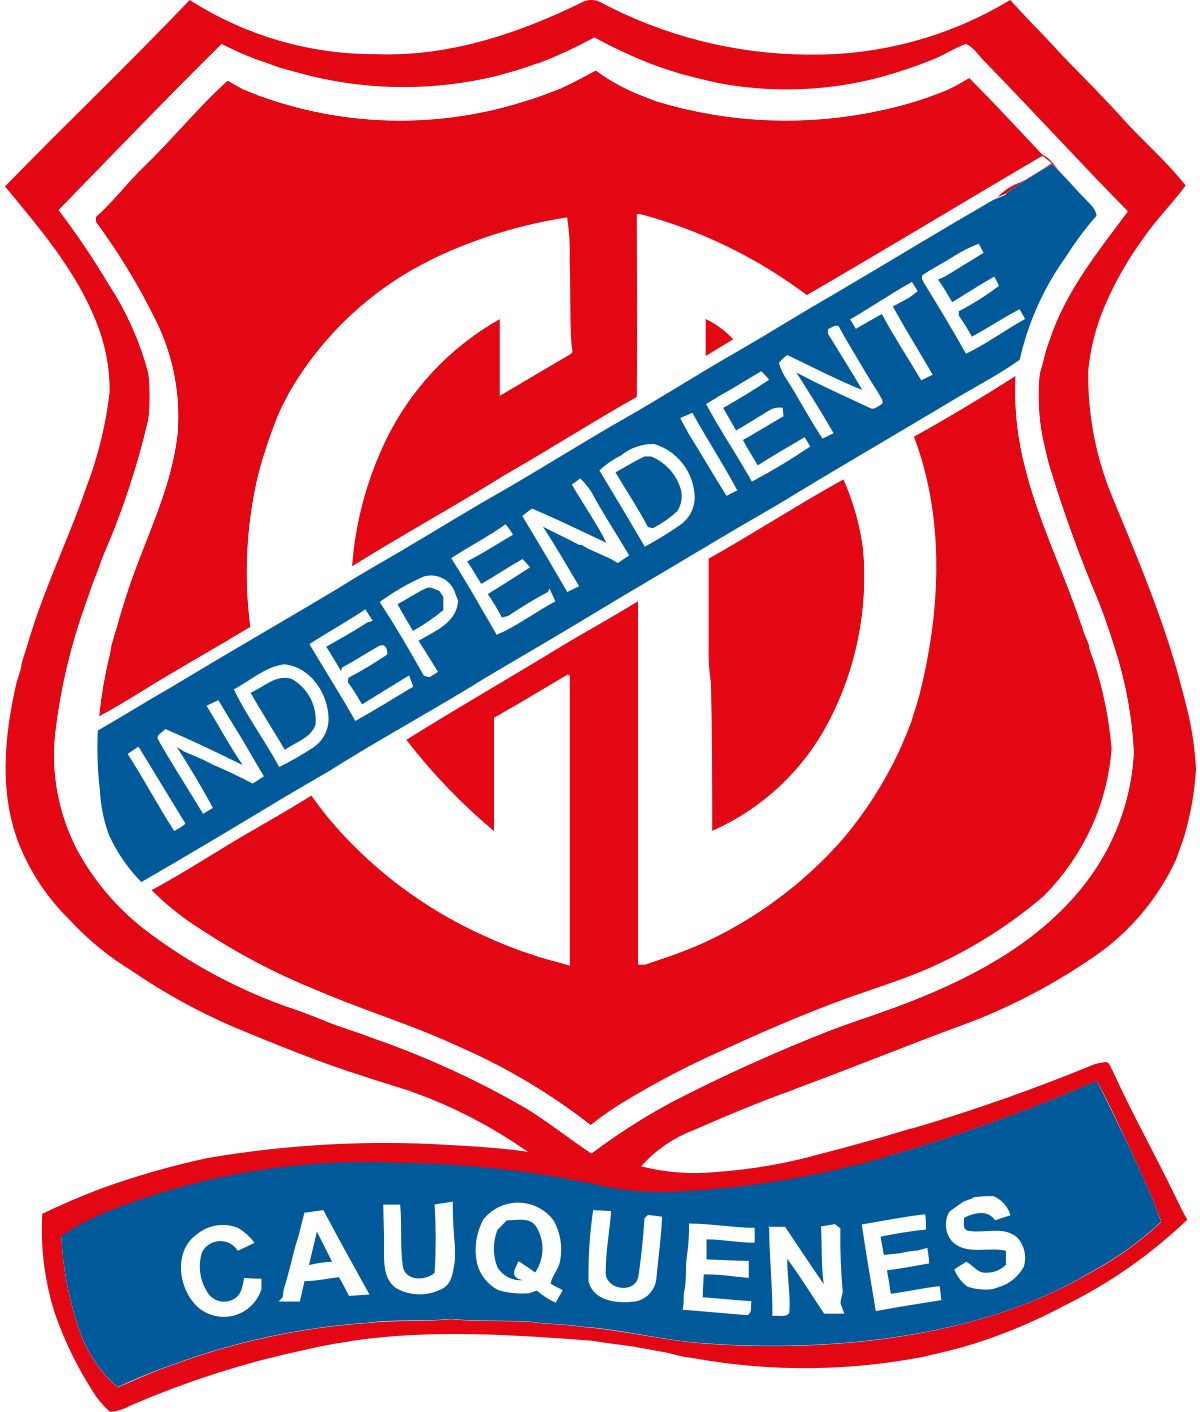 Independiente Cauquenes logo